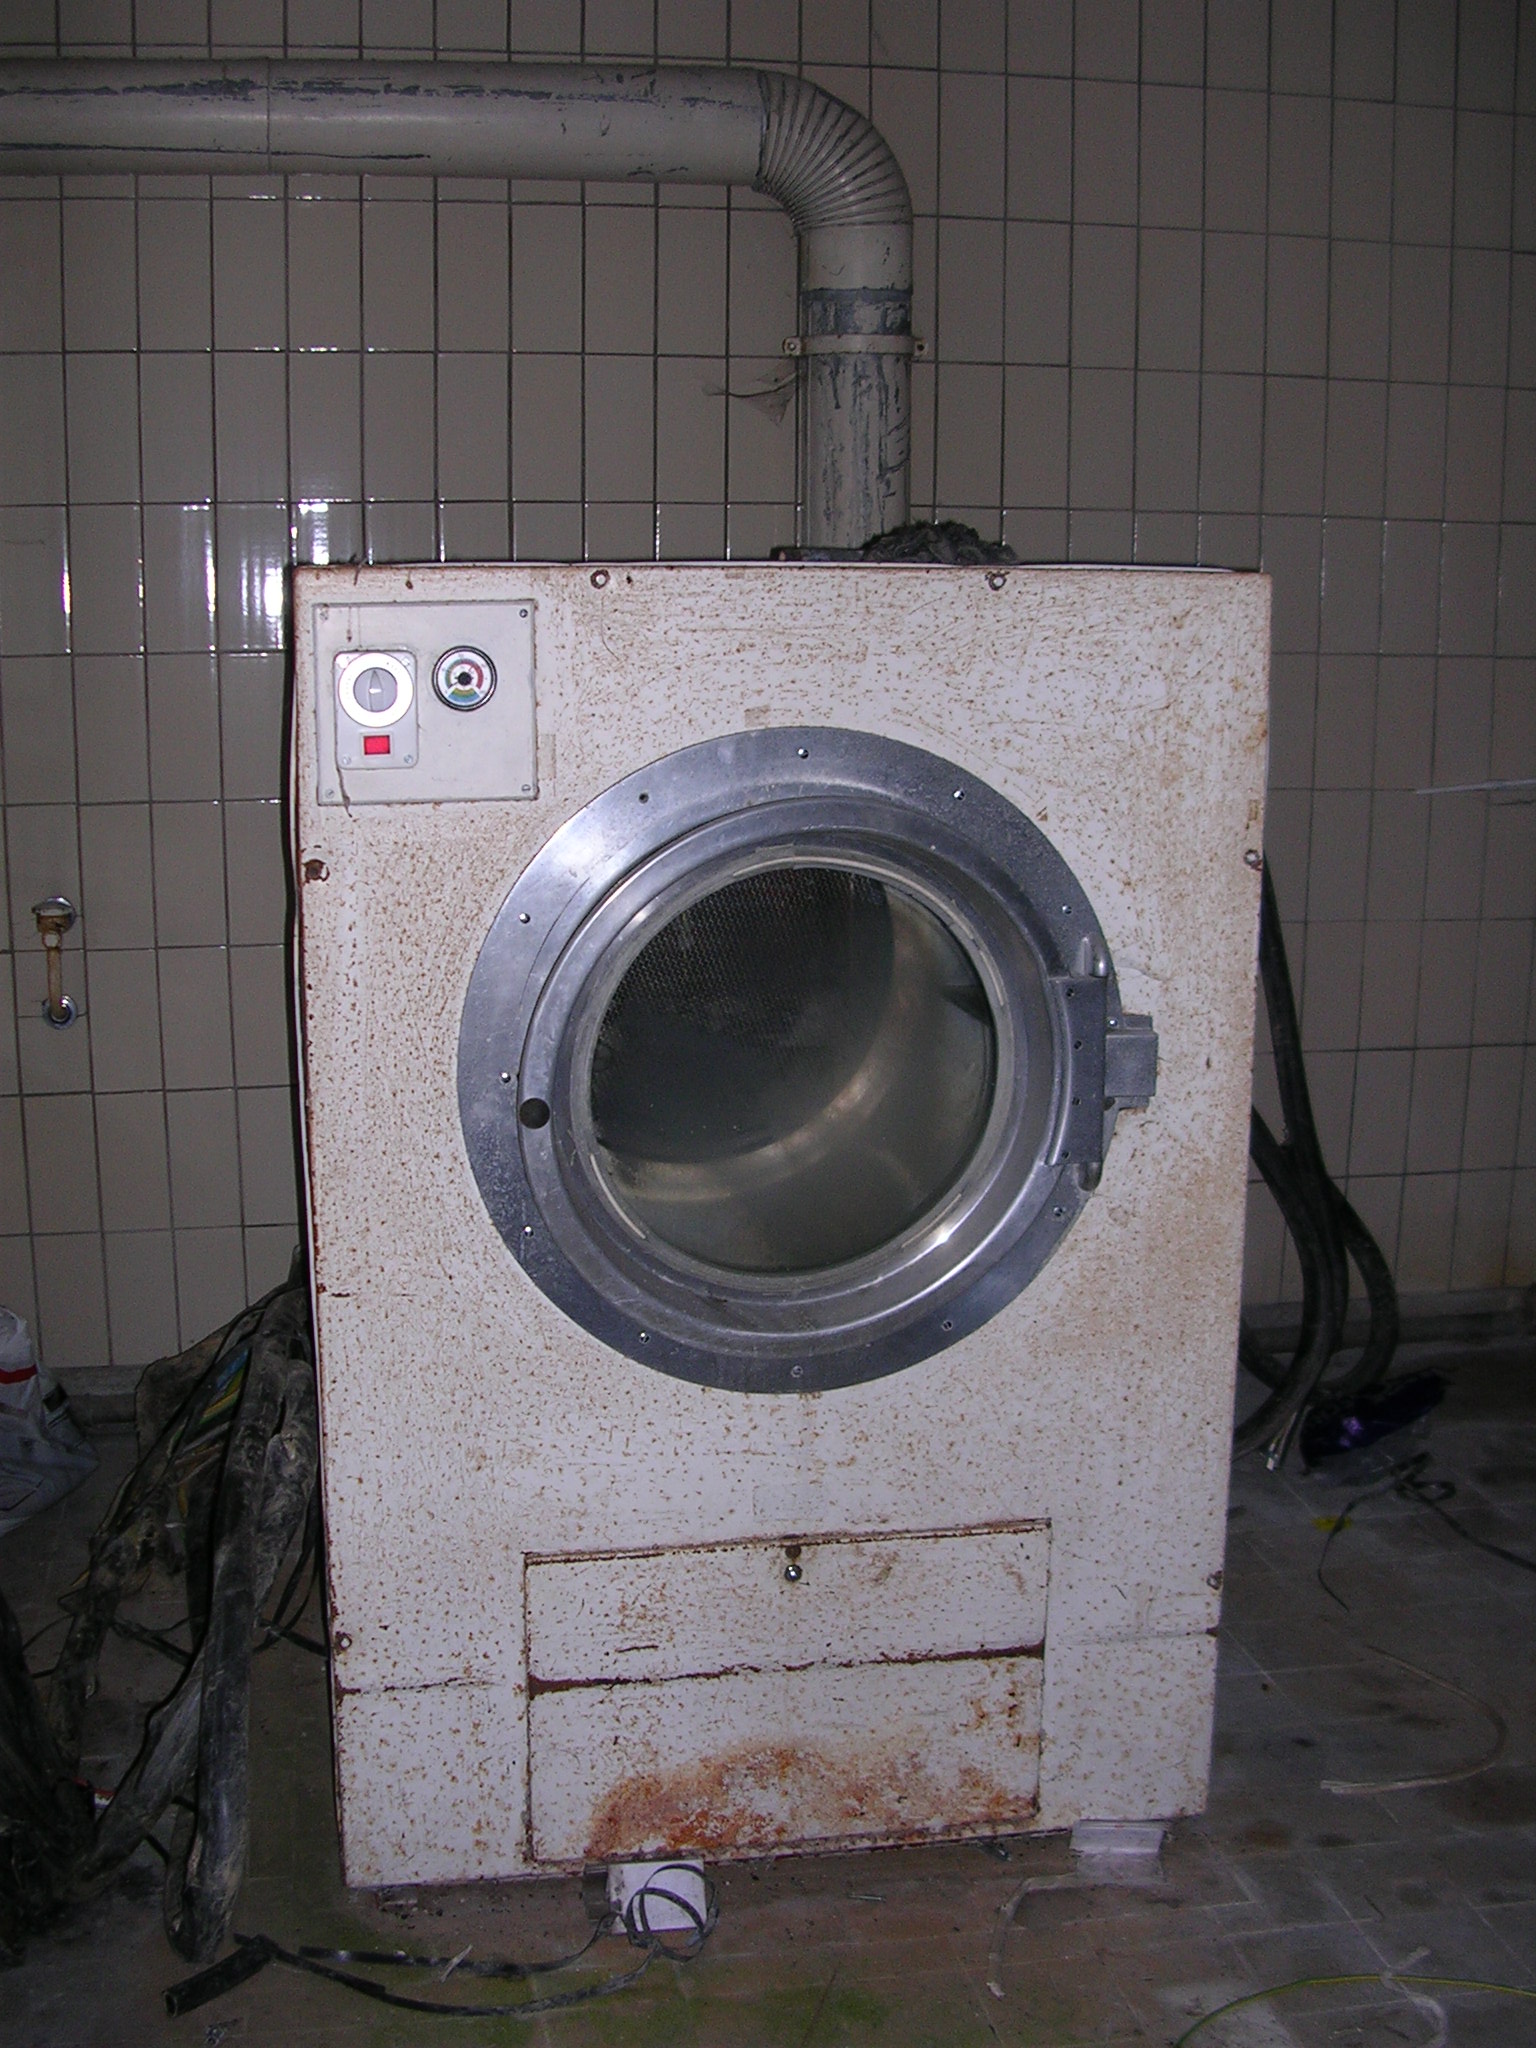 Datei:Lost Washing Machine.JPG